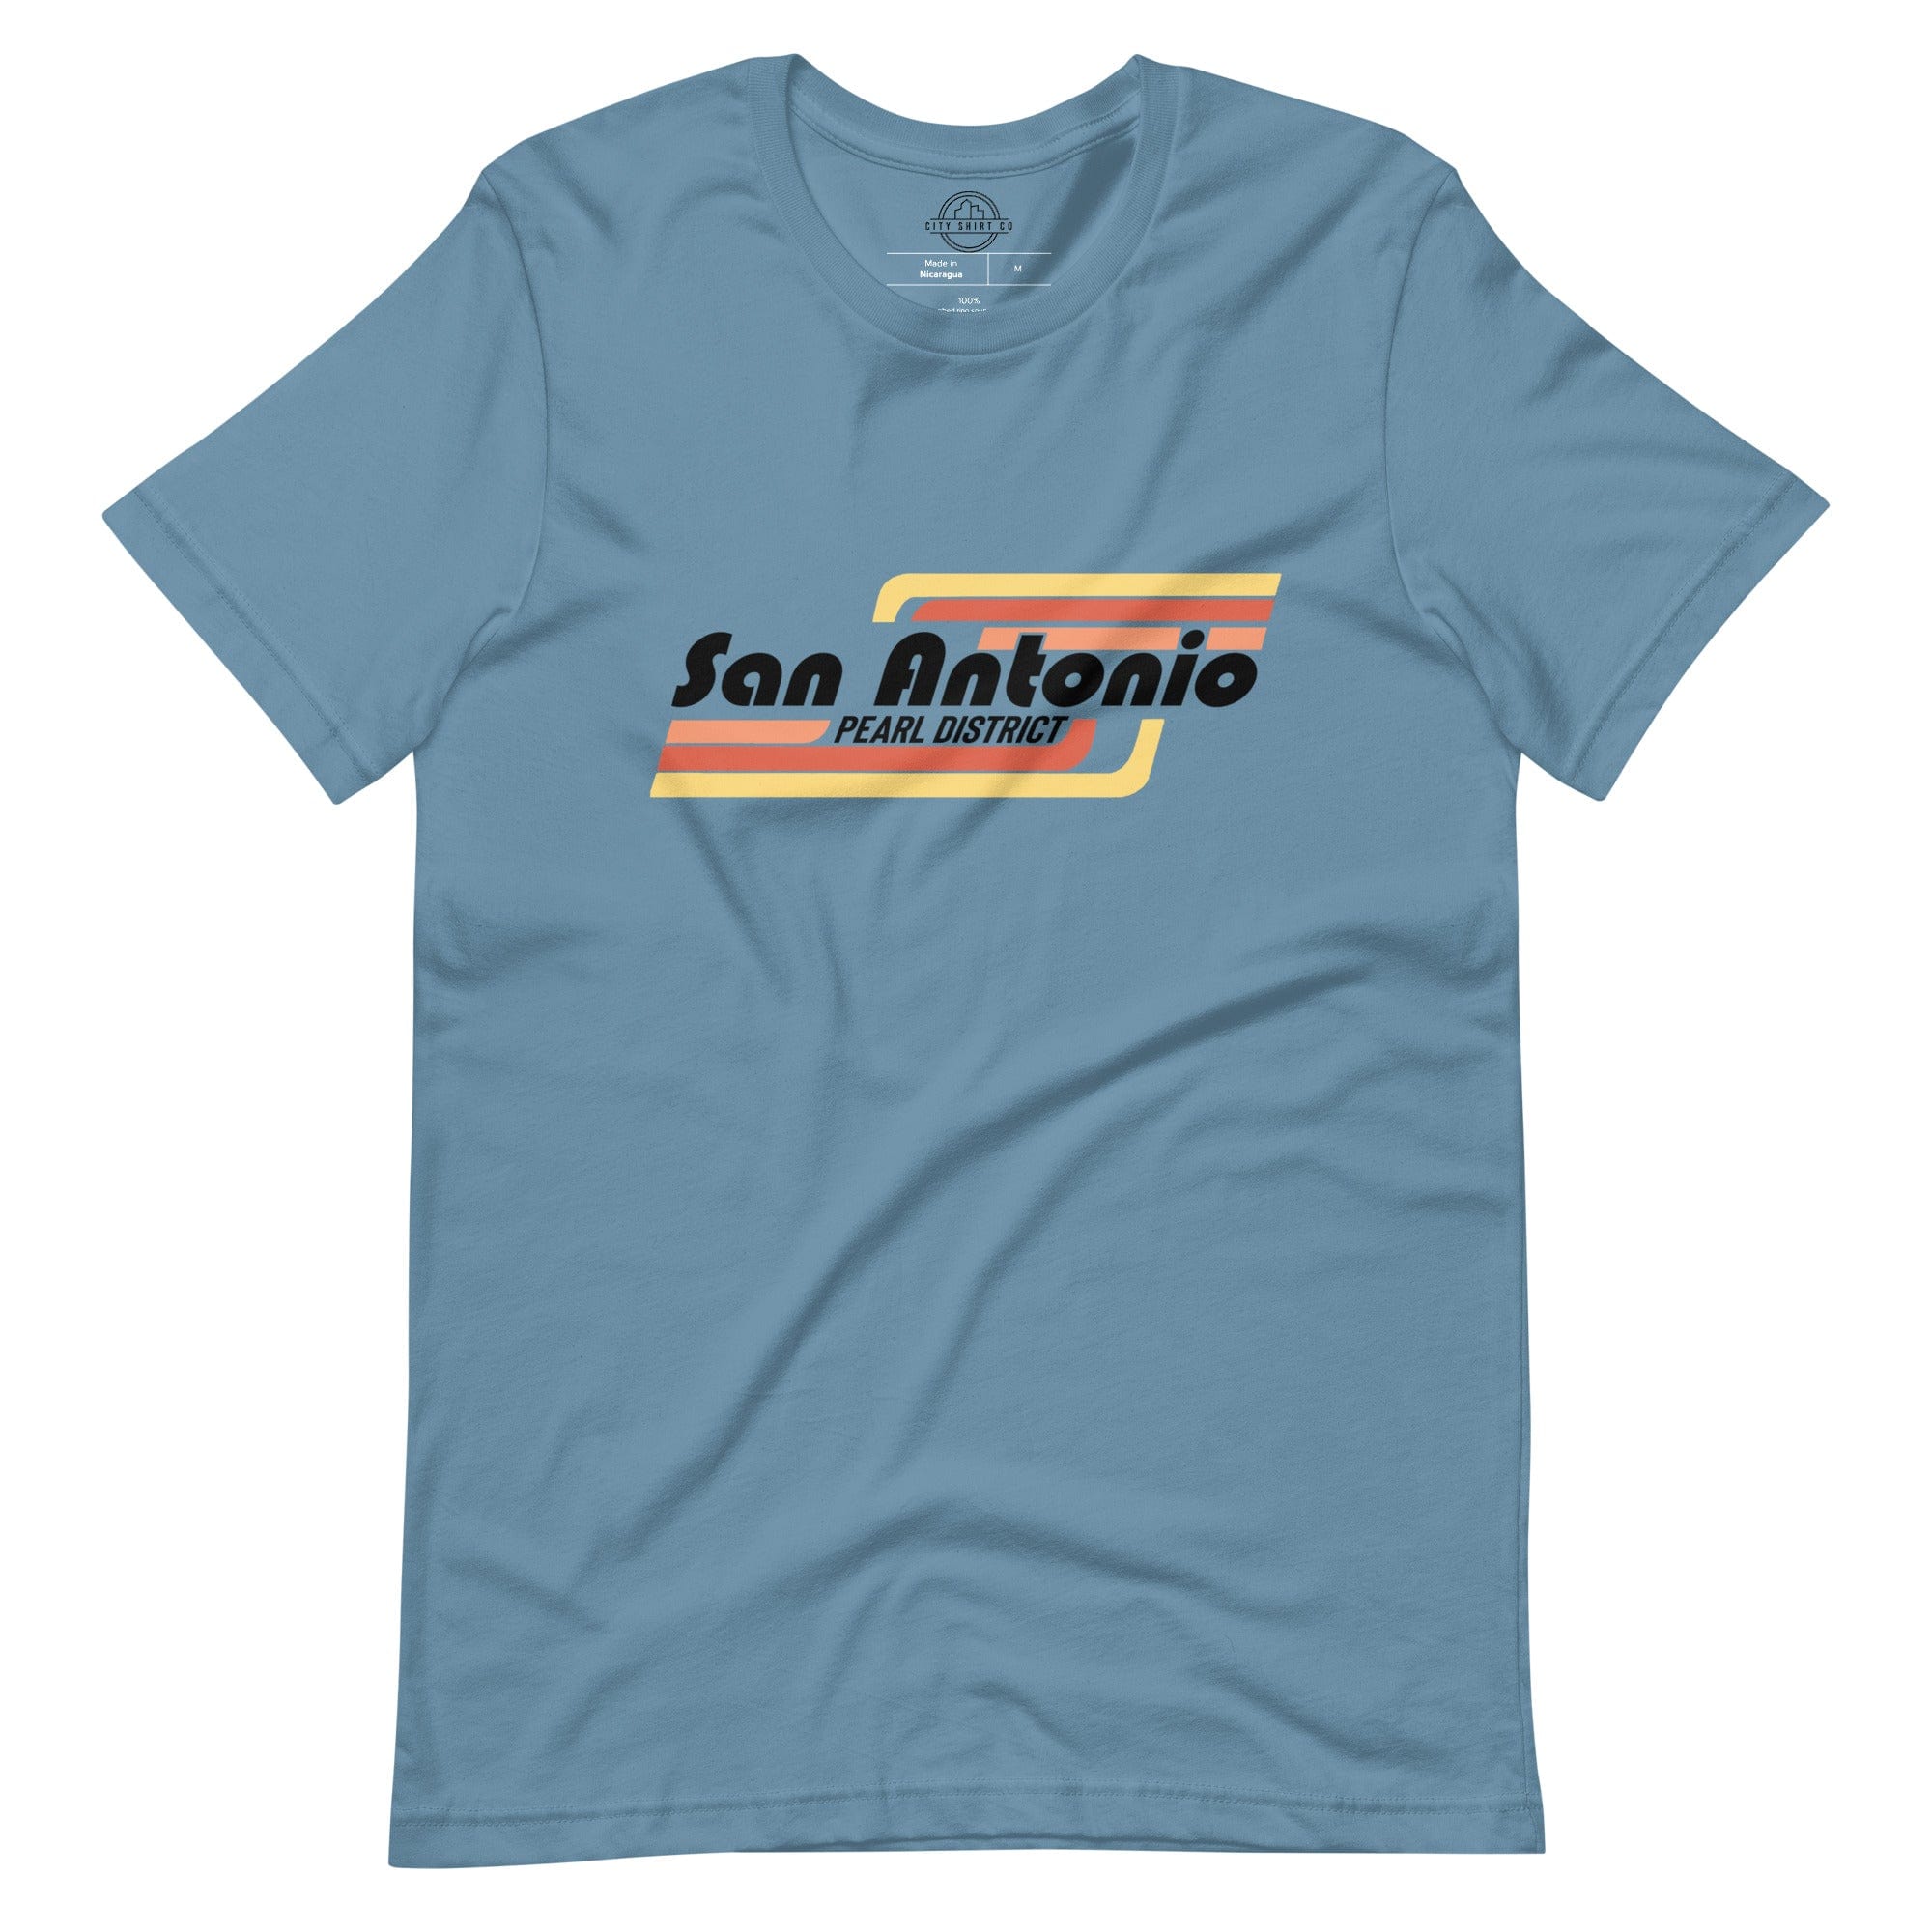 City Shirt Co San Antonio | Pearl District T Shirt Steel Blue / S